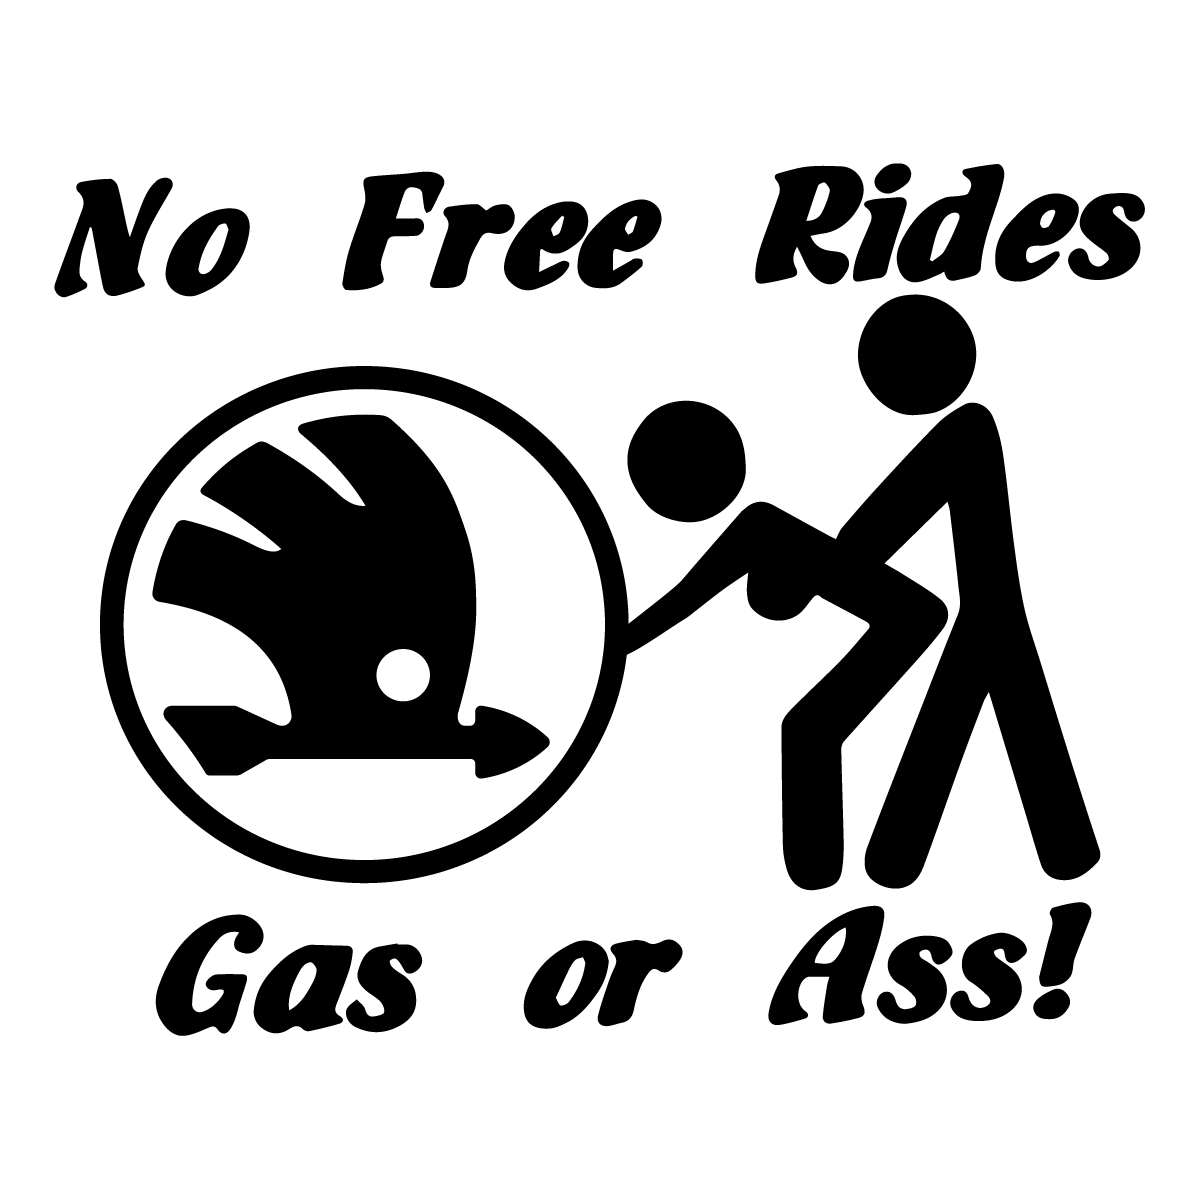 No free rides skoda